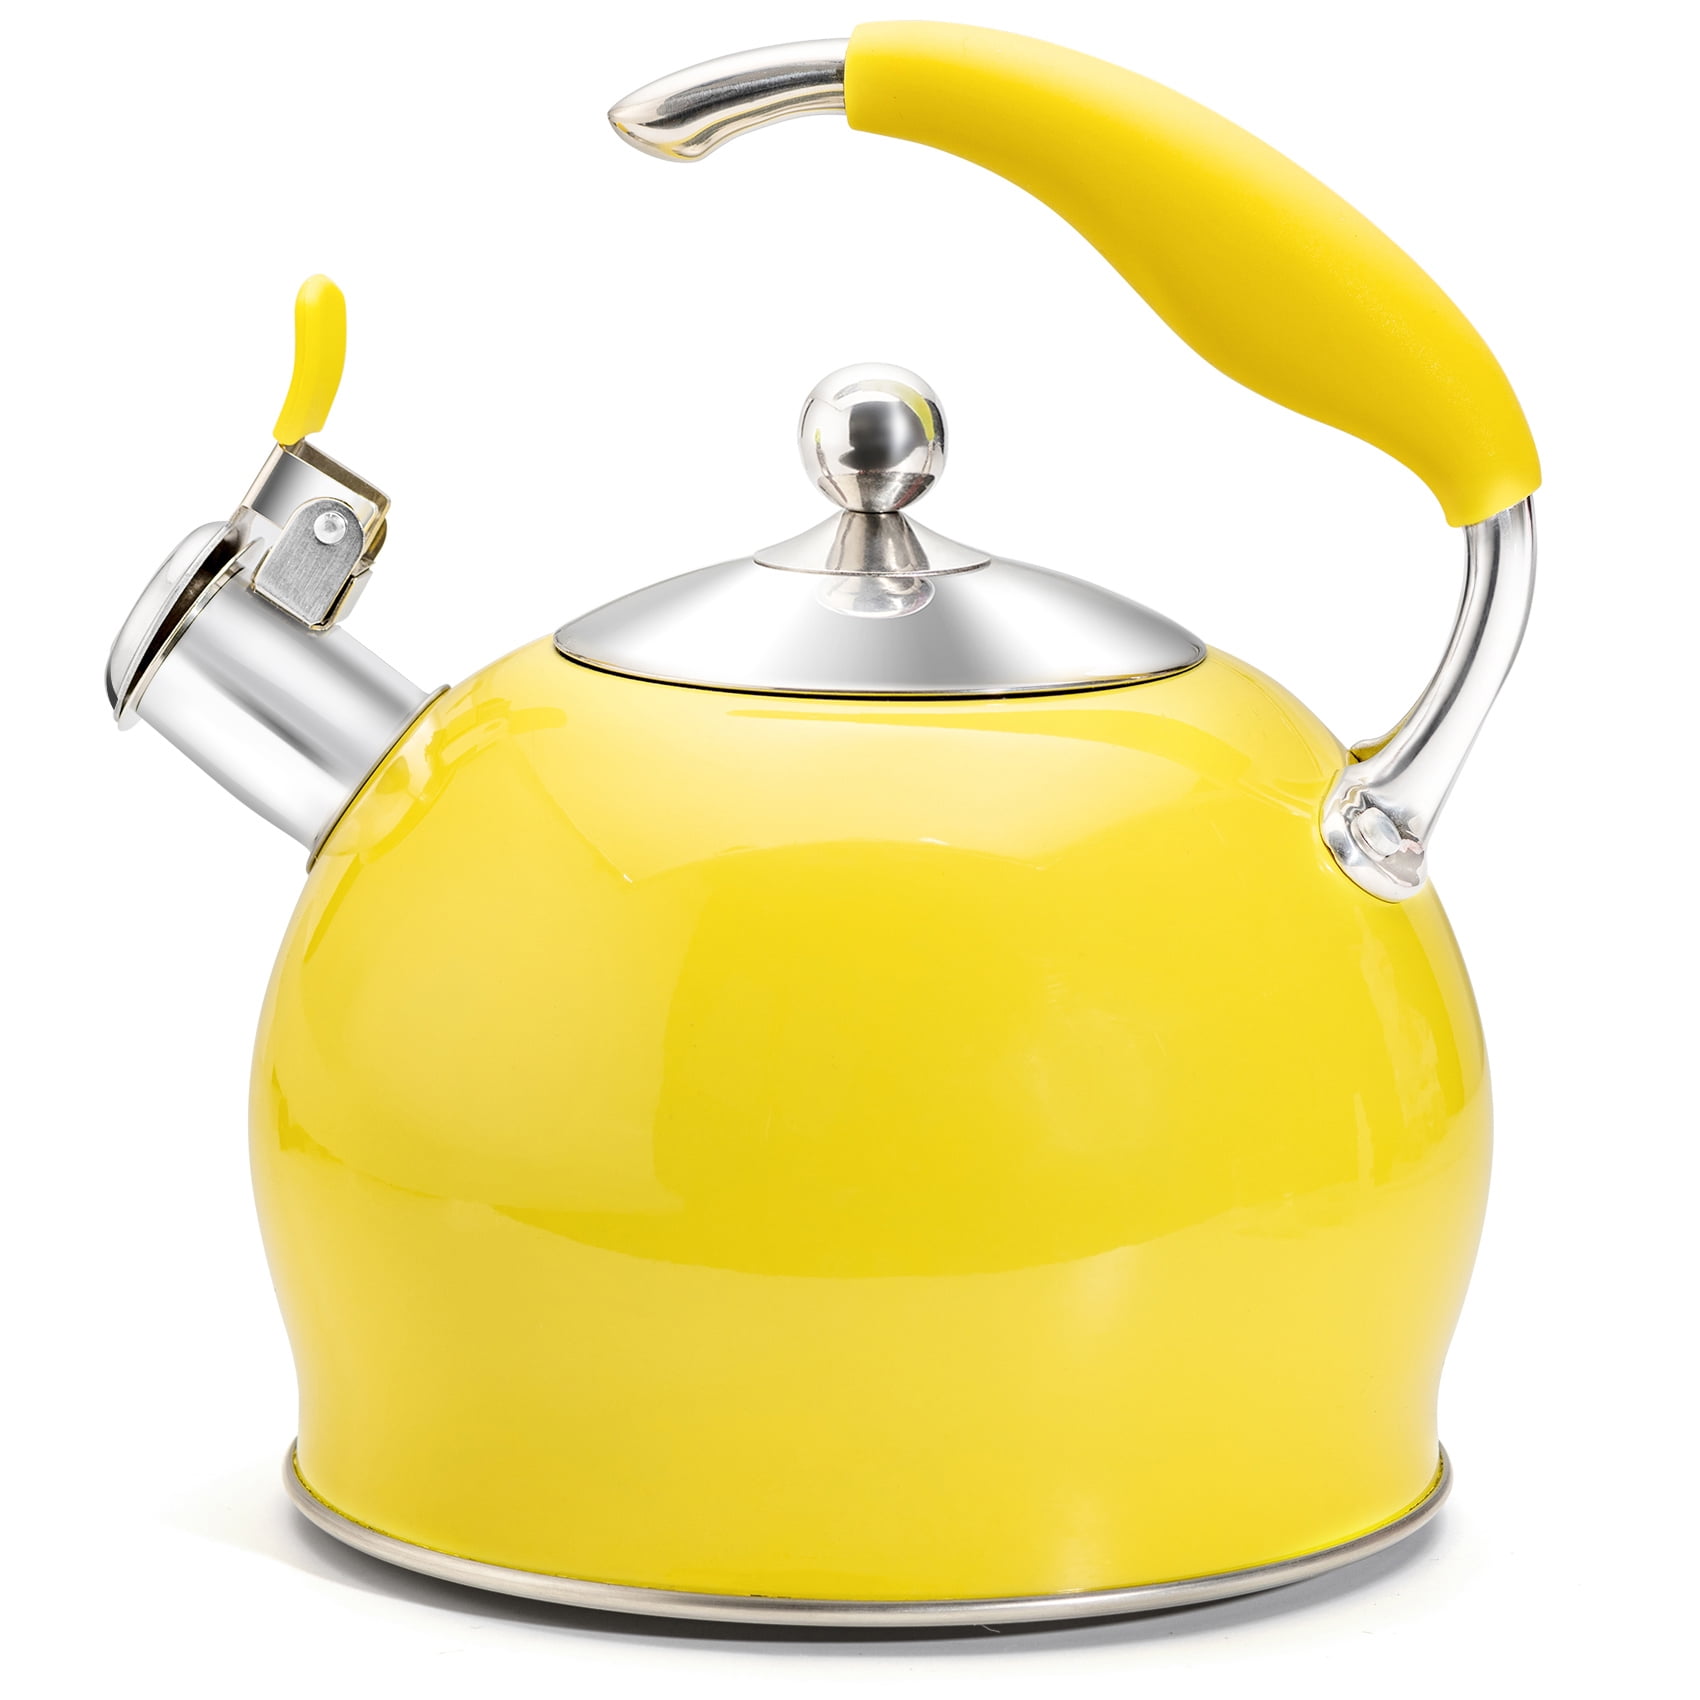 Susteas Rapid Heating Stainless Steel Electric Tea Kettle (Yellow) – SUSTEAS